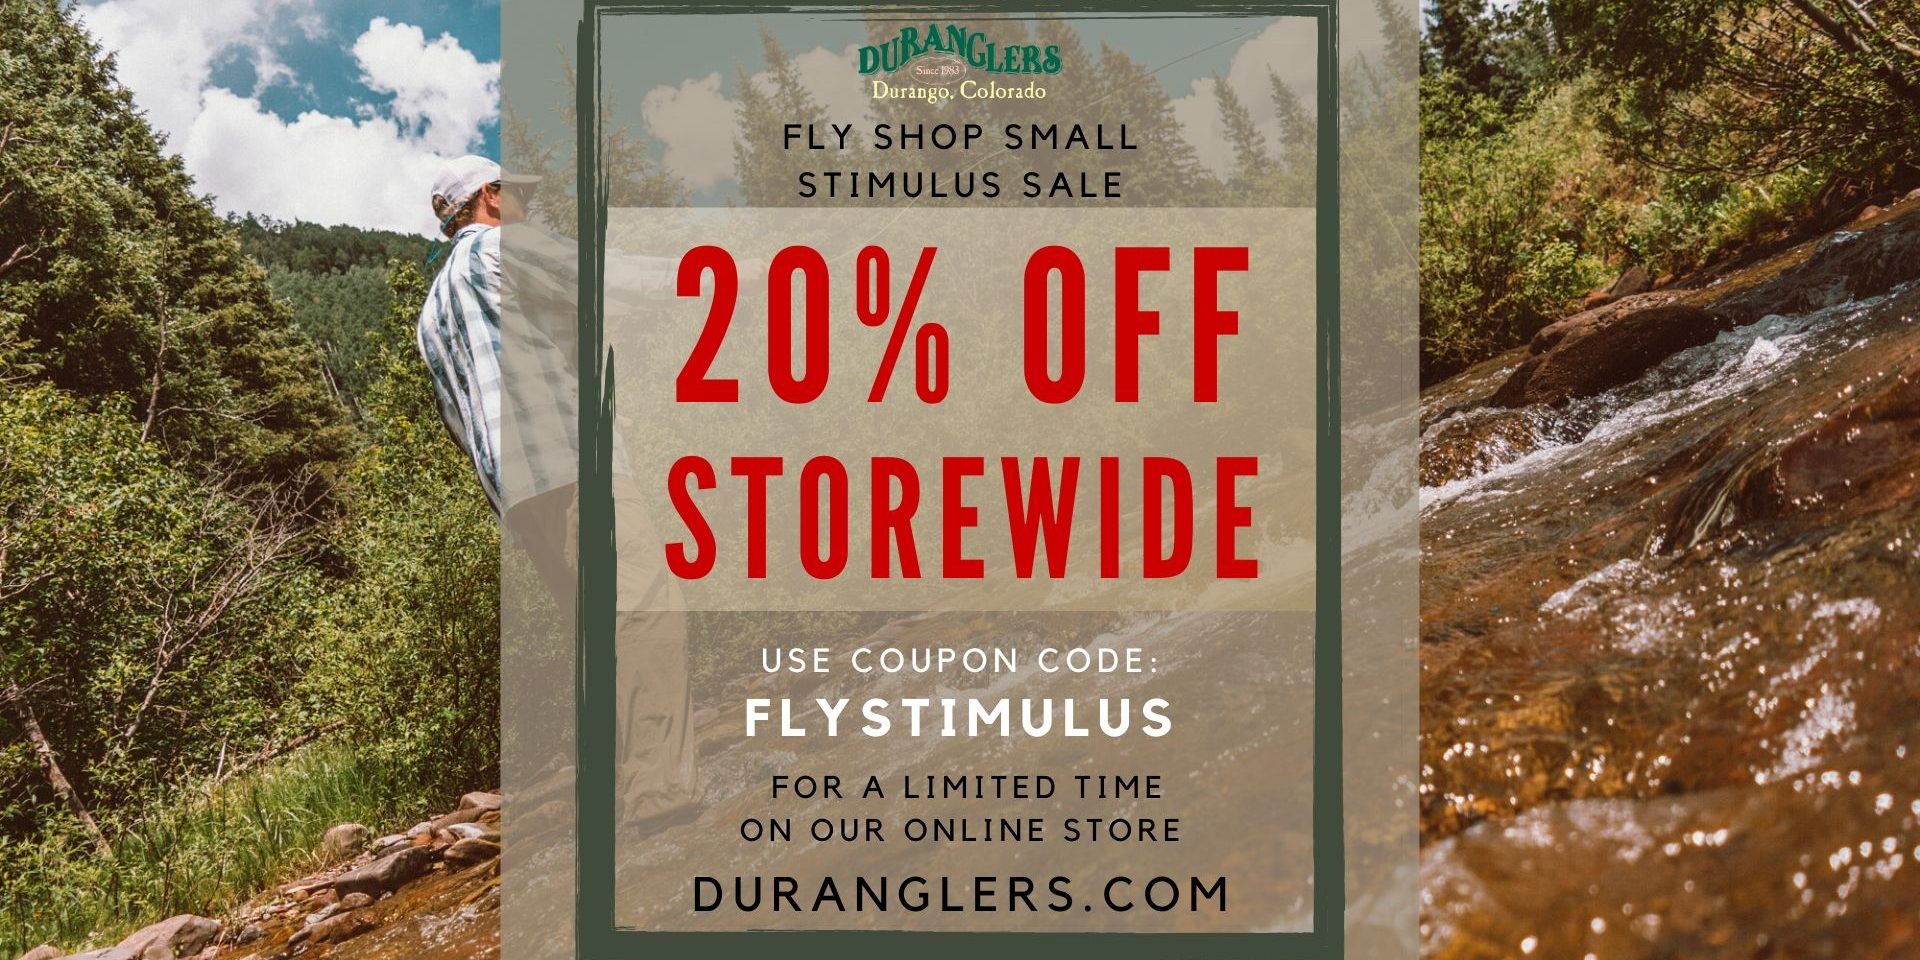 Duranglers Flies and Supplies, Visit Durango, CO